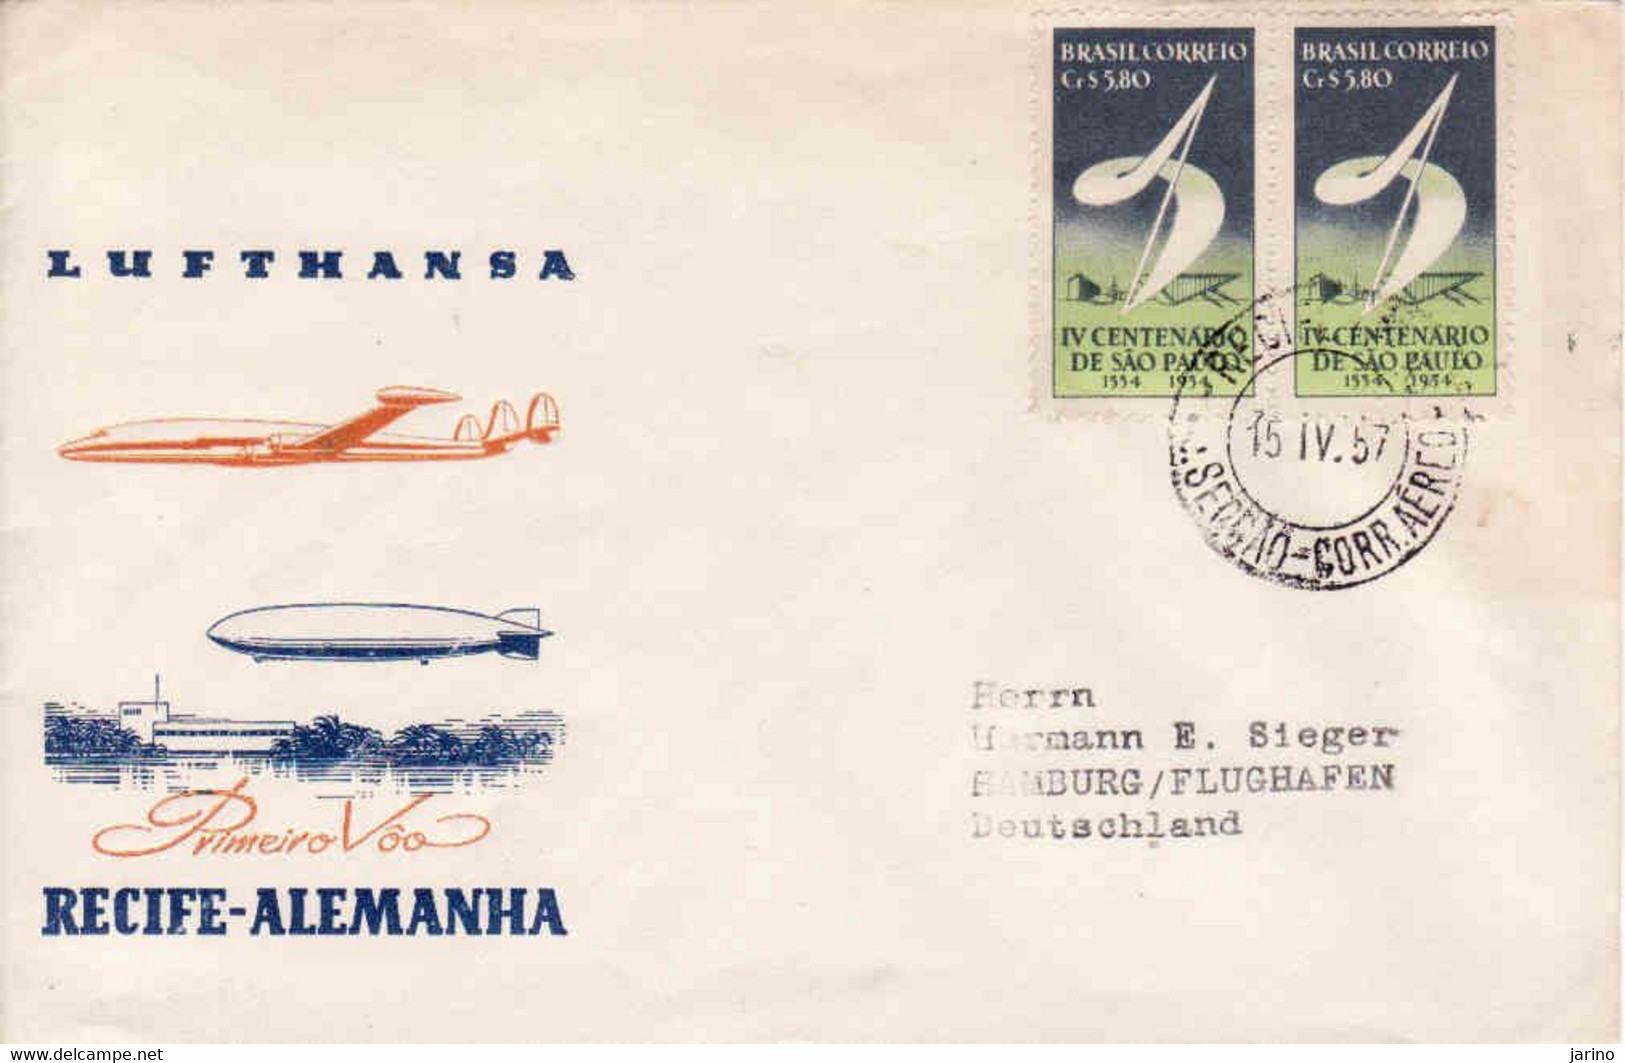 Brasilia 1957, Lufpost Lufthansa Firstflug Recife Alemania, Hamburg Flughafen - Posta Aerea (società Private)